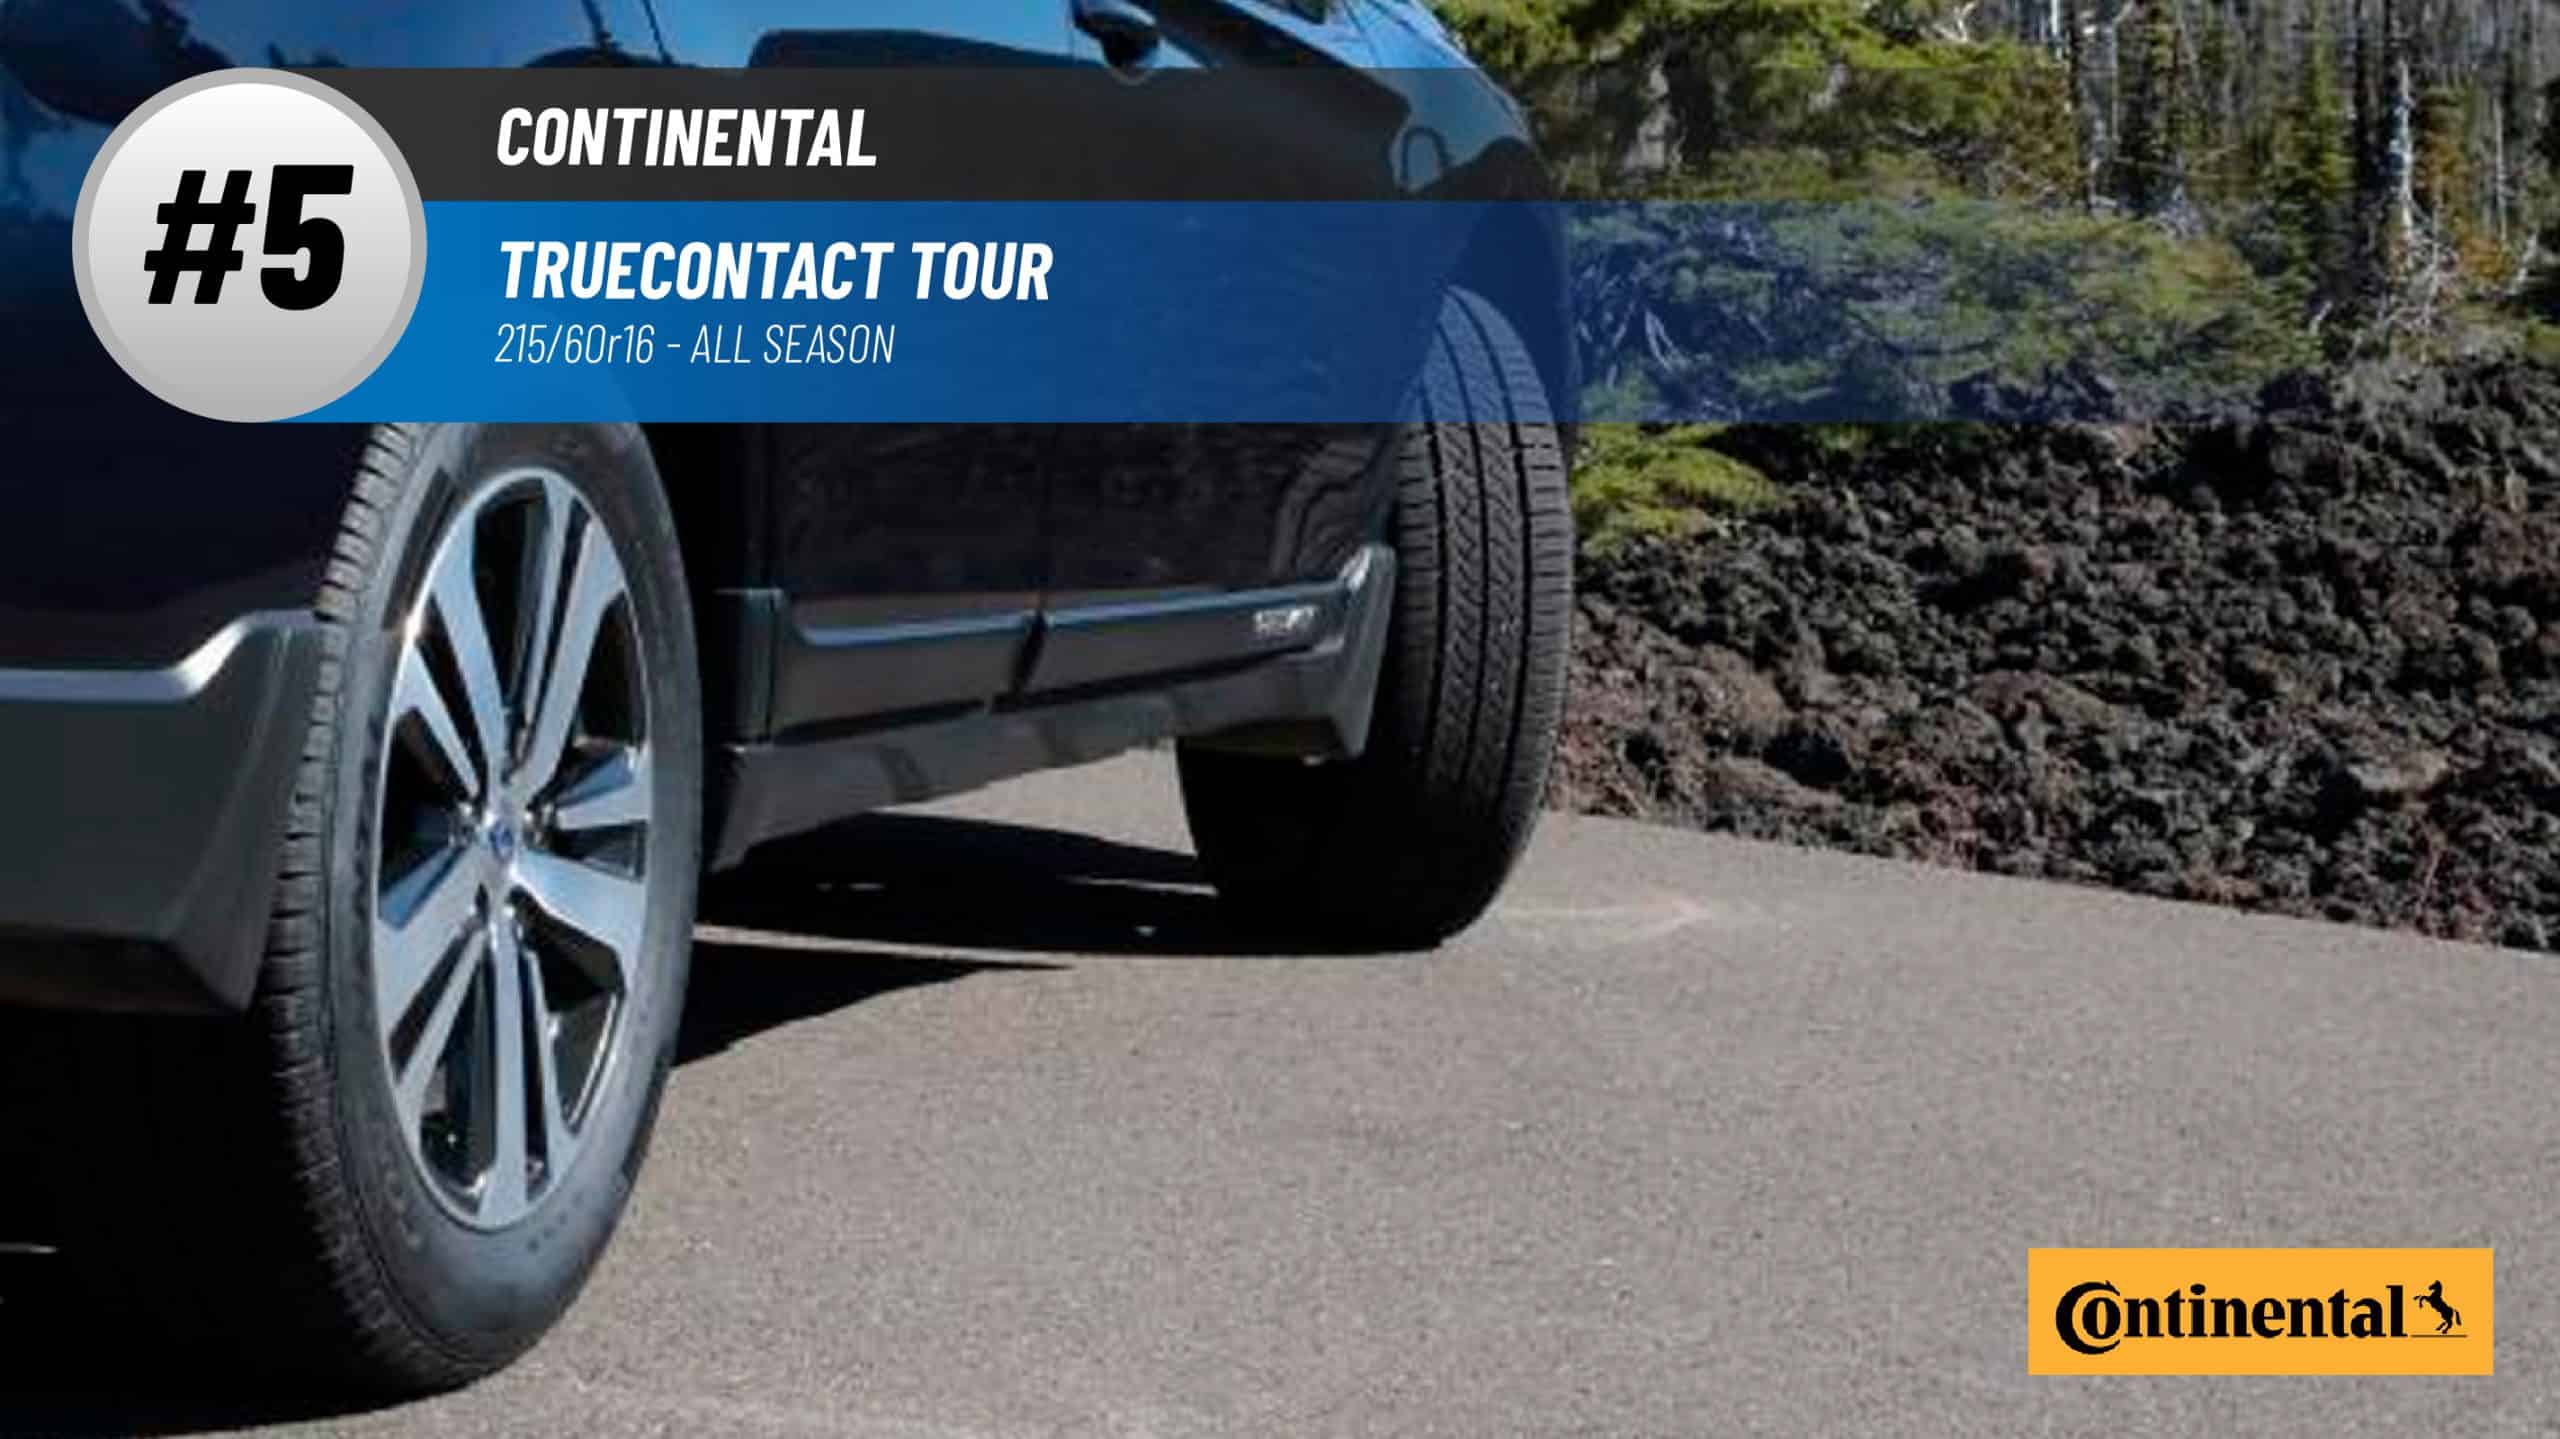 Top #5 All Season Tires: Continental TrueContact Tour – 215/60r16